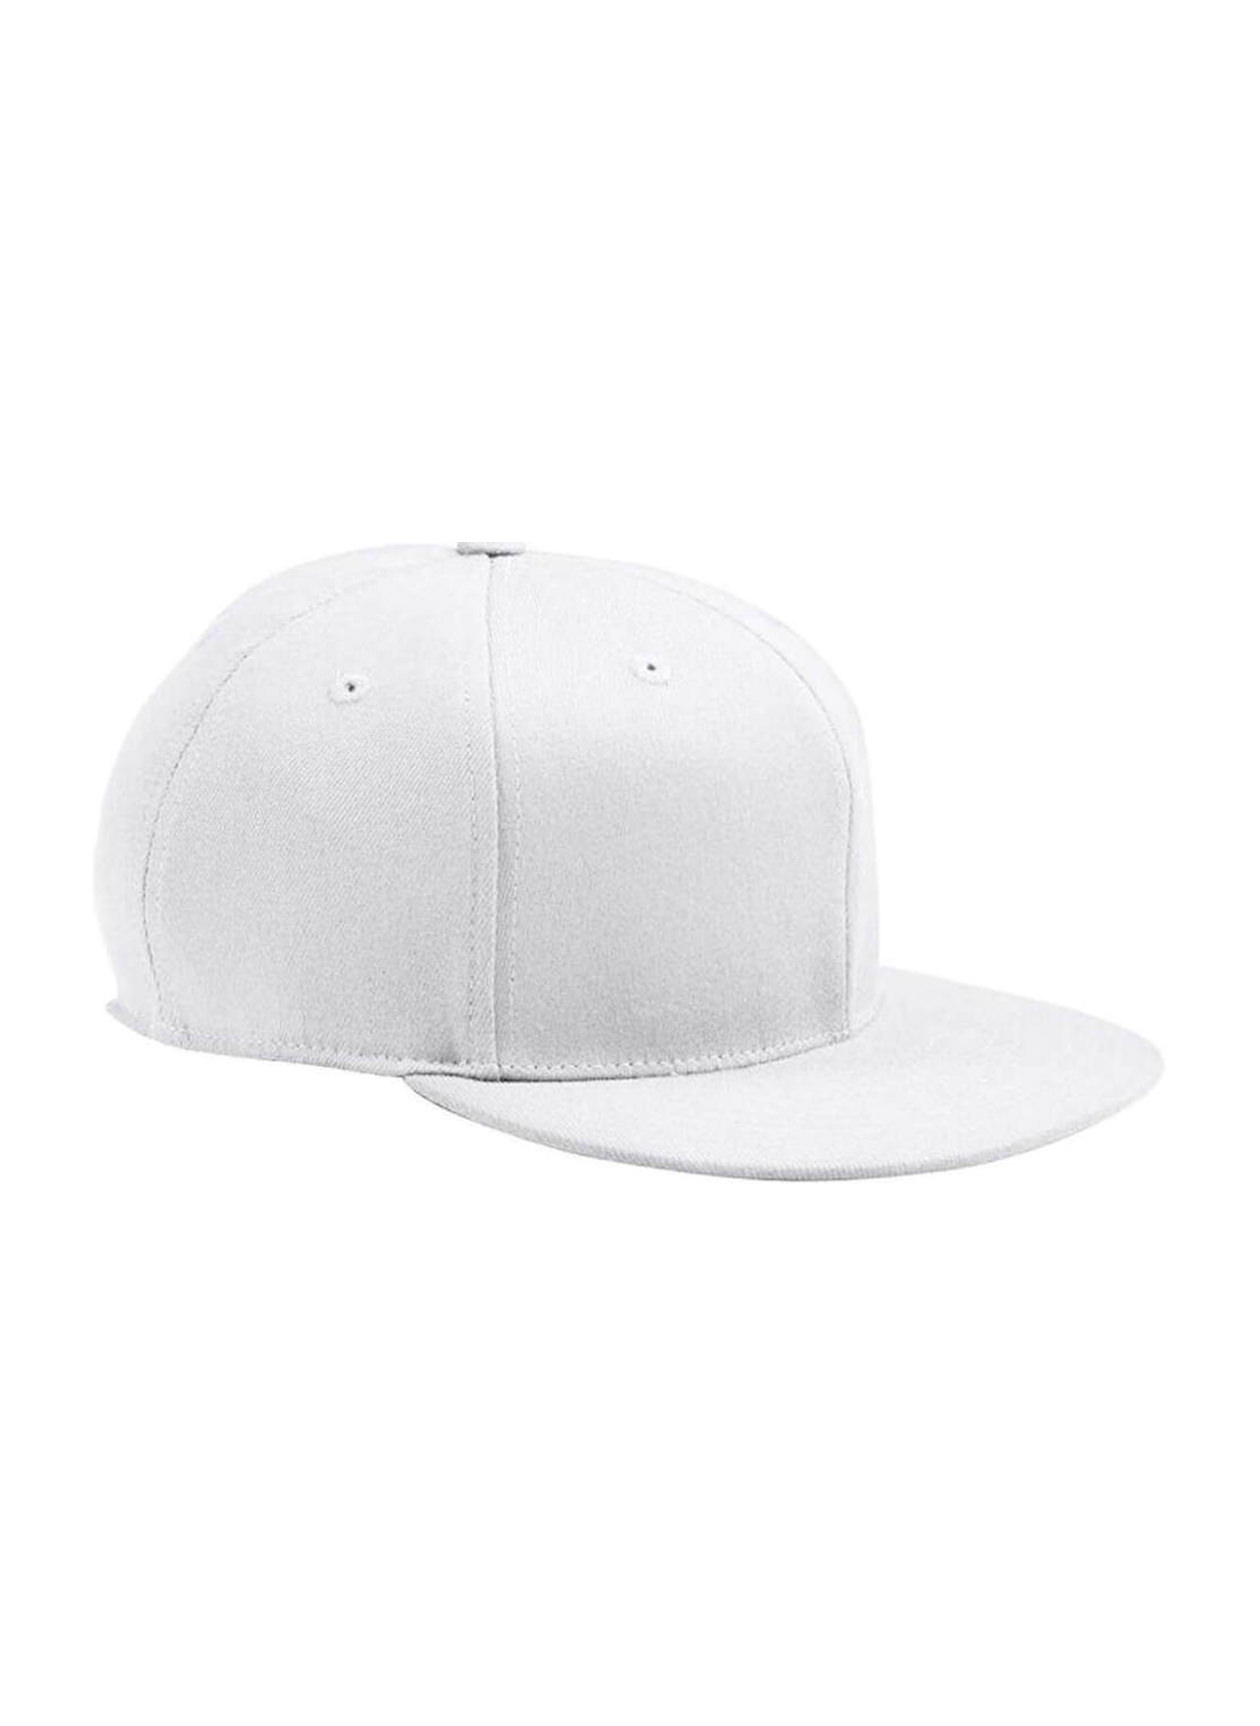 Hat Fitted Premium Flexfit White | 210 Flexfit